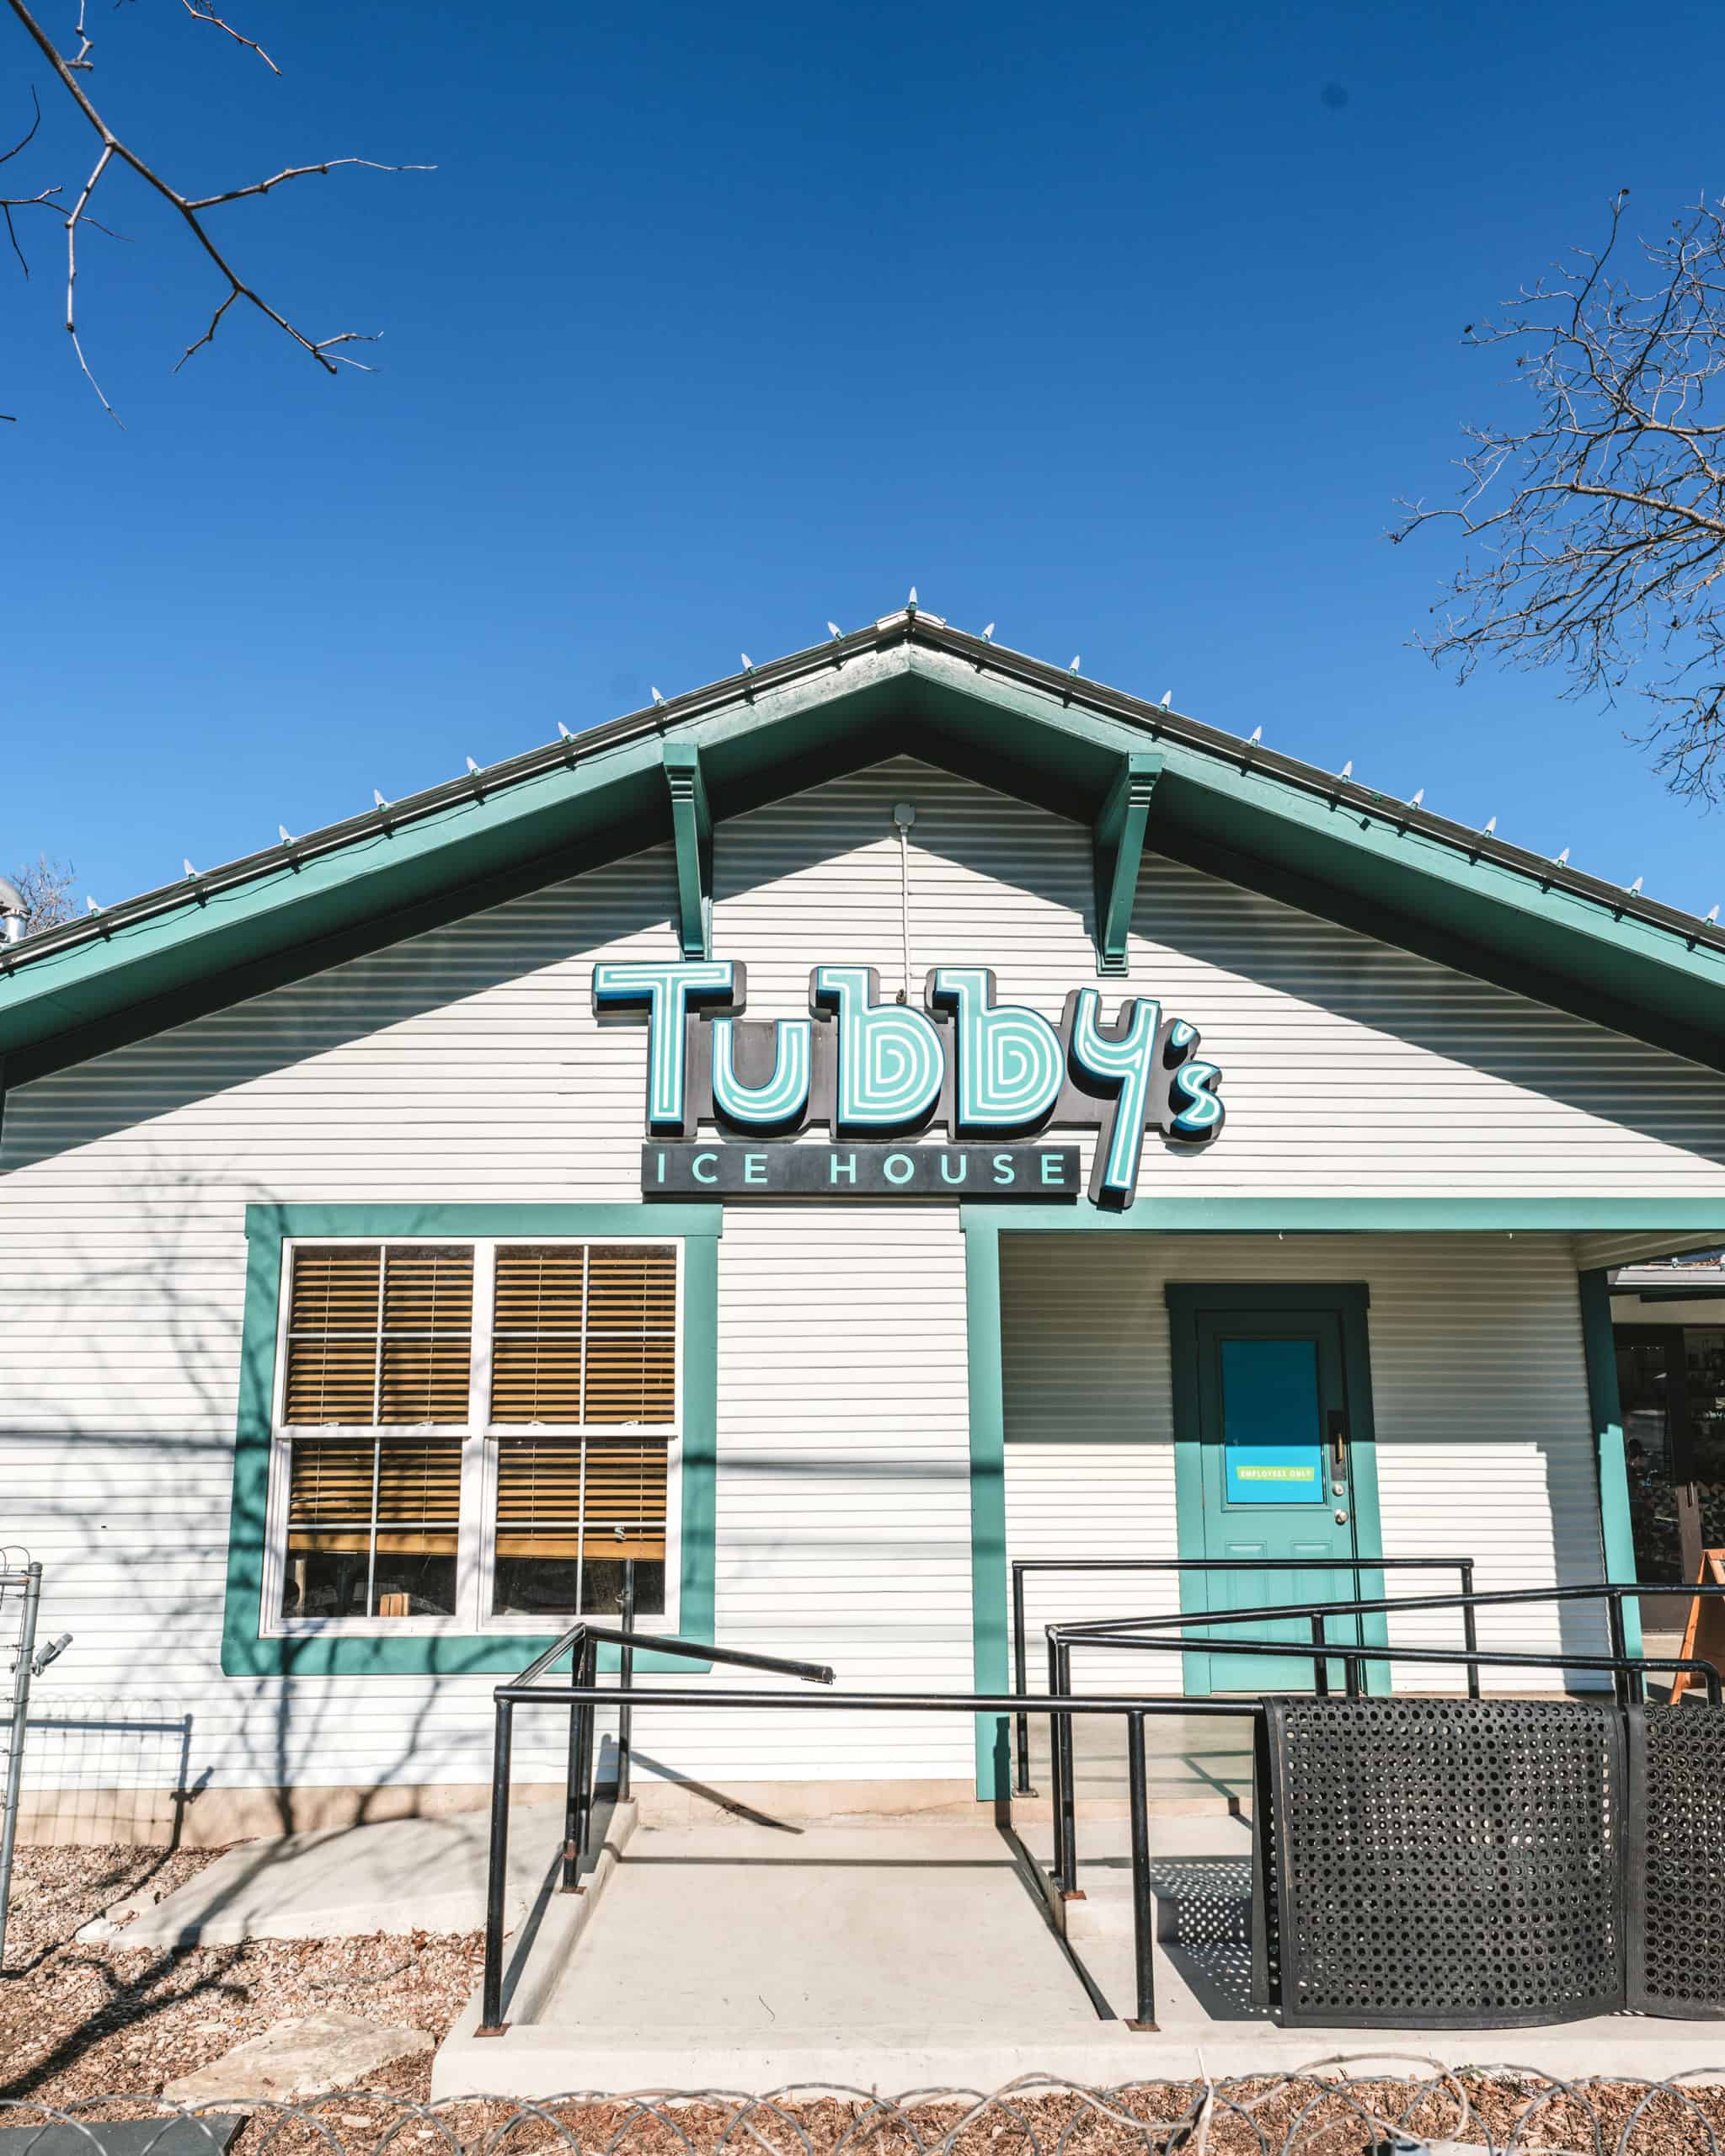 Tubby's Icehouse restaurant in Fredericksburg Texas